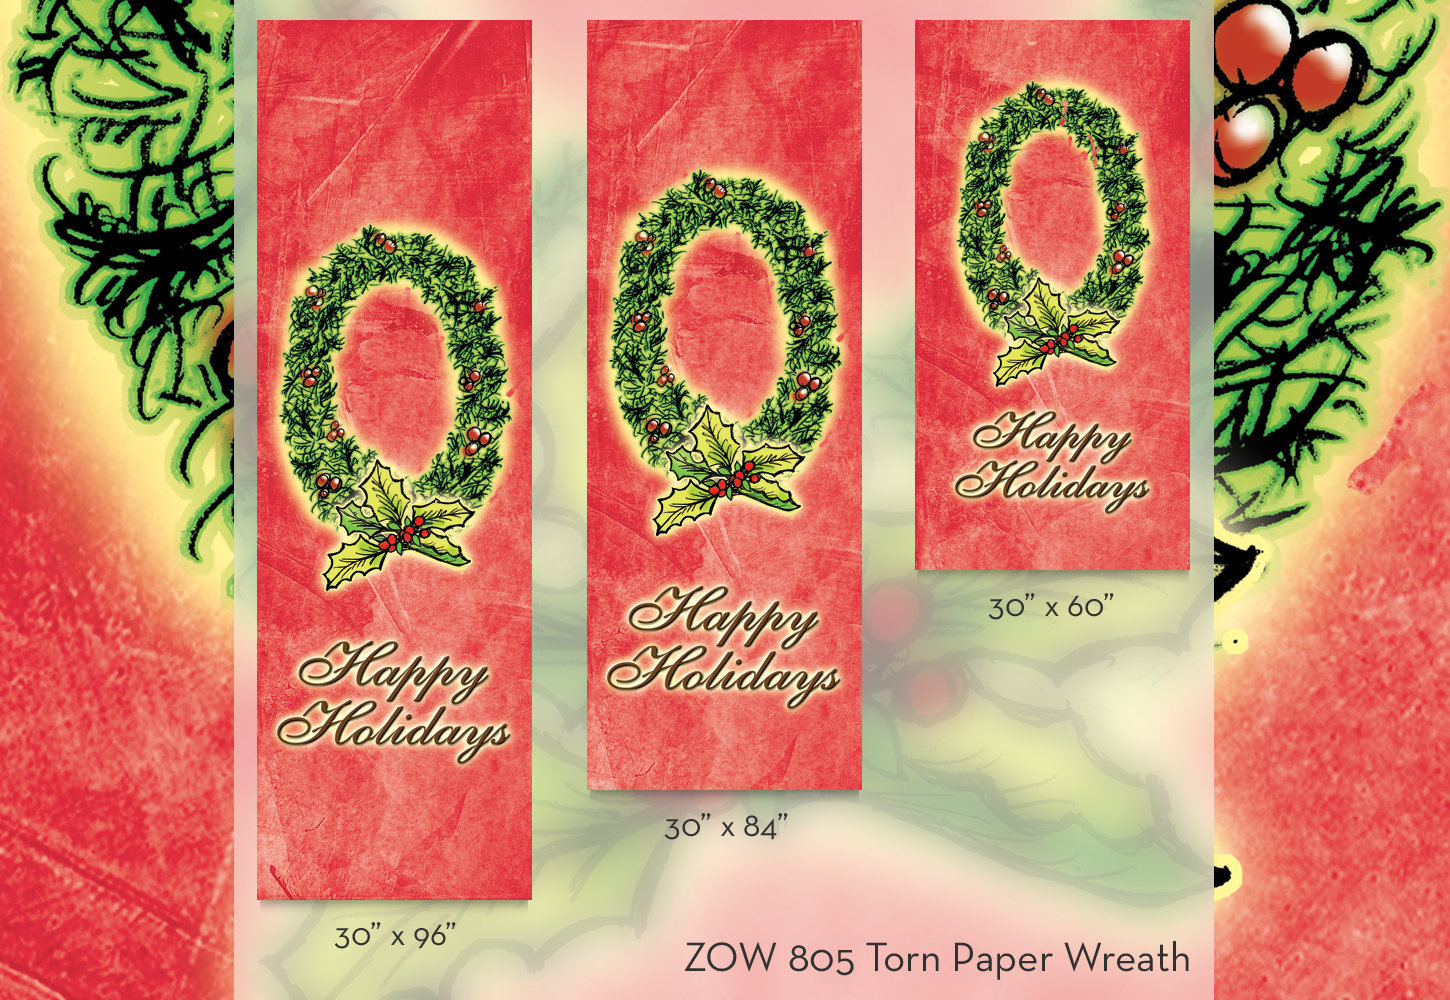 ZOW 805 Torn Paper Wreath